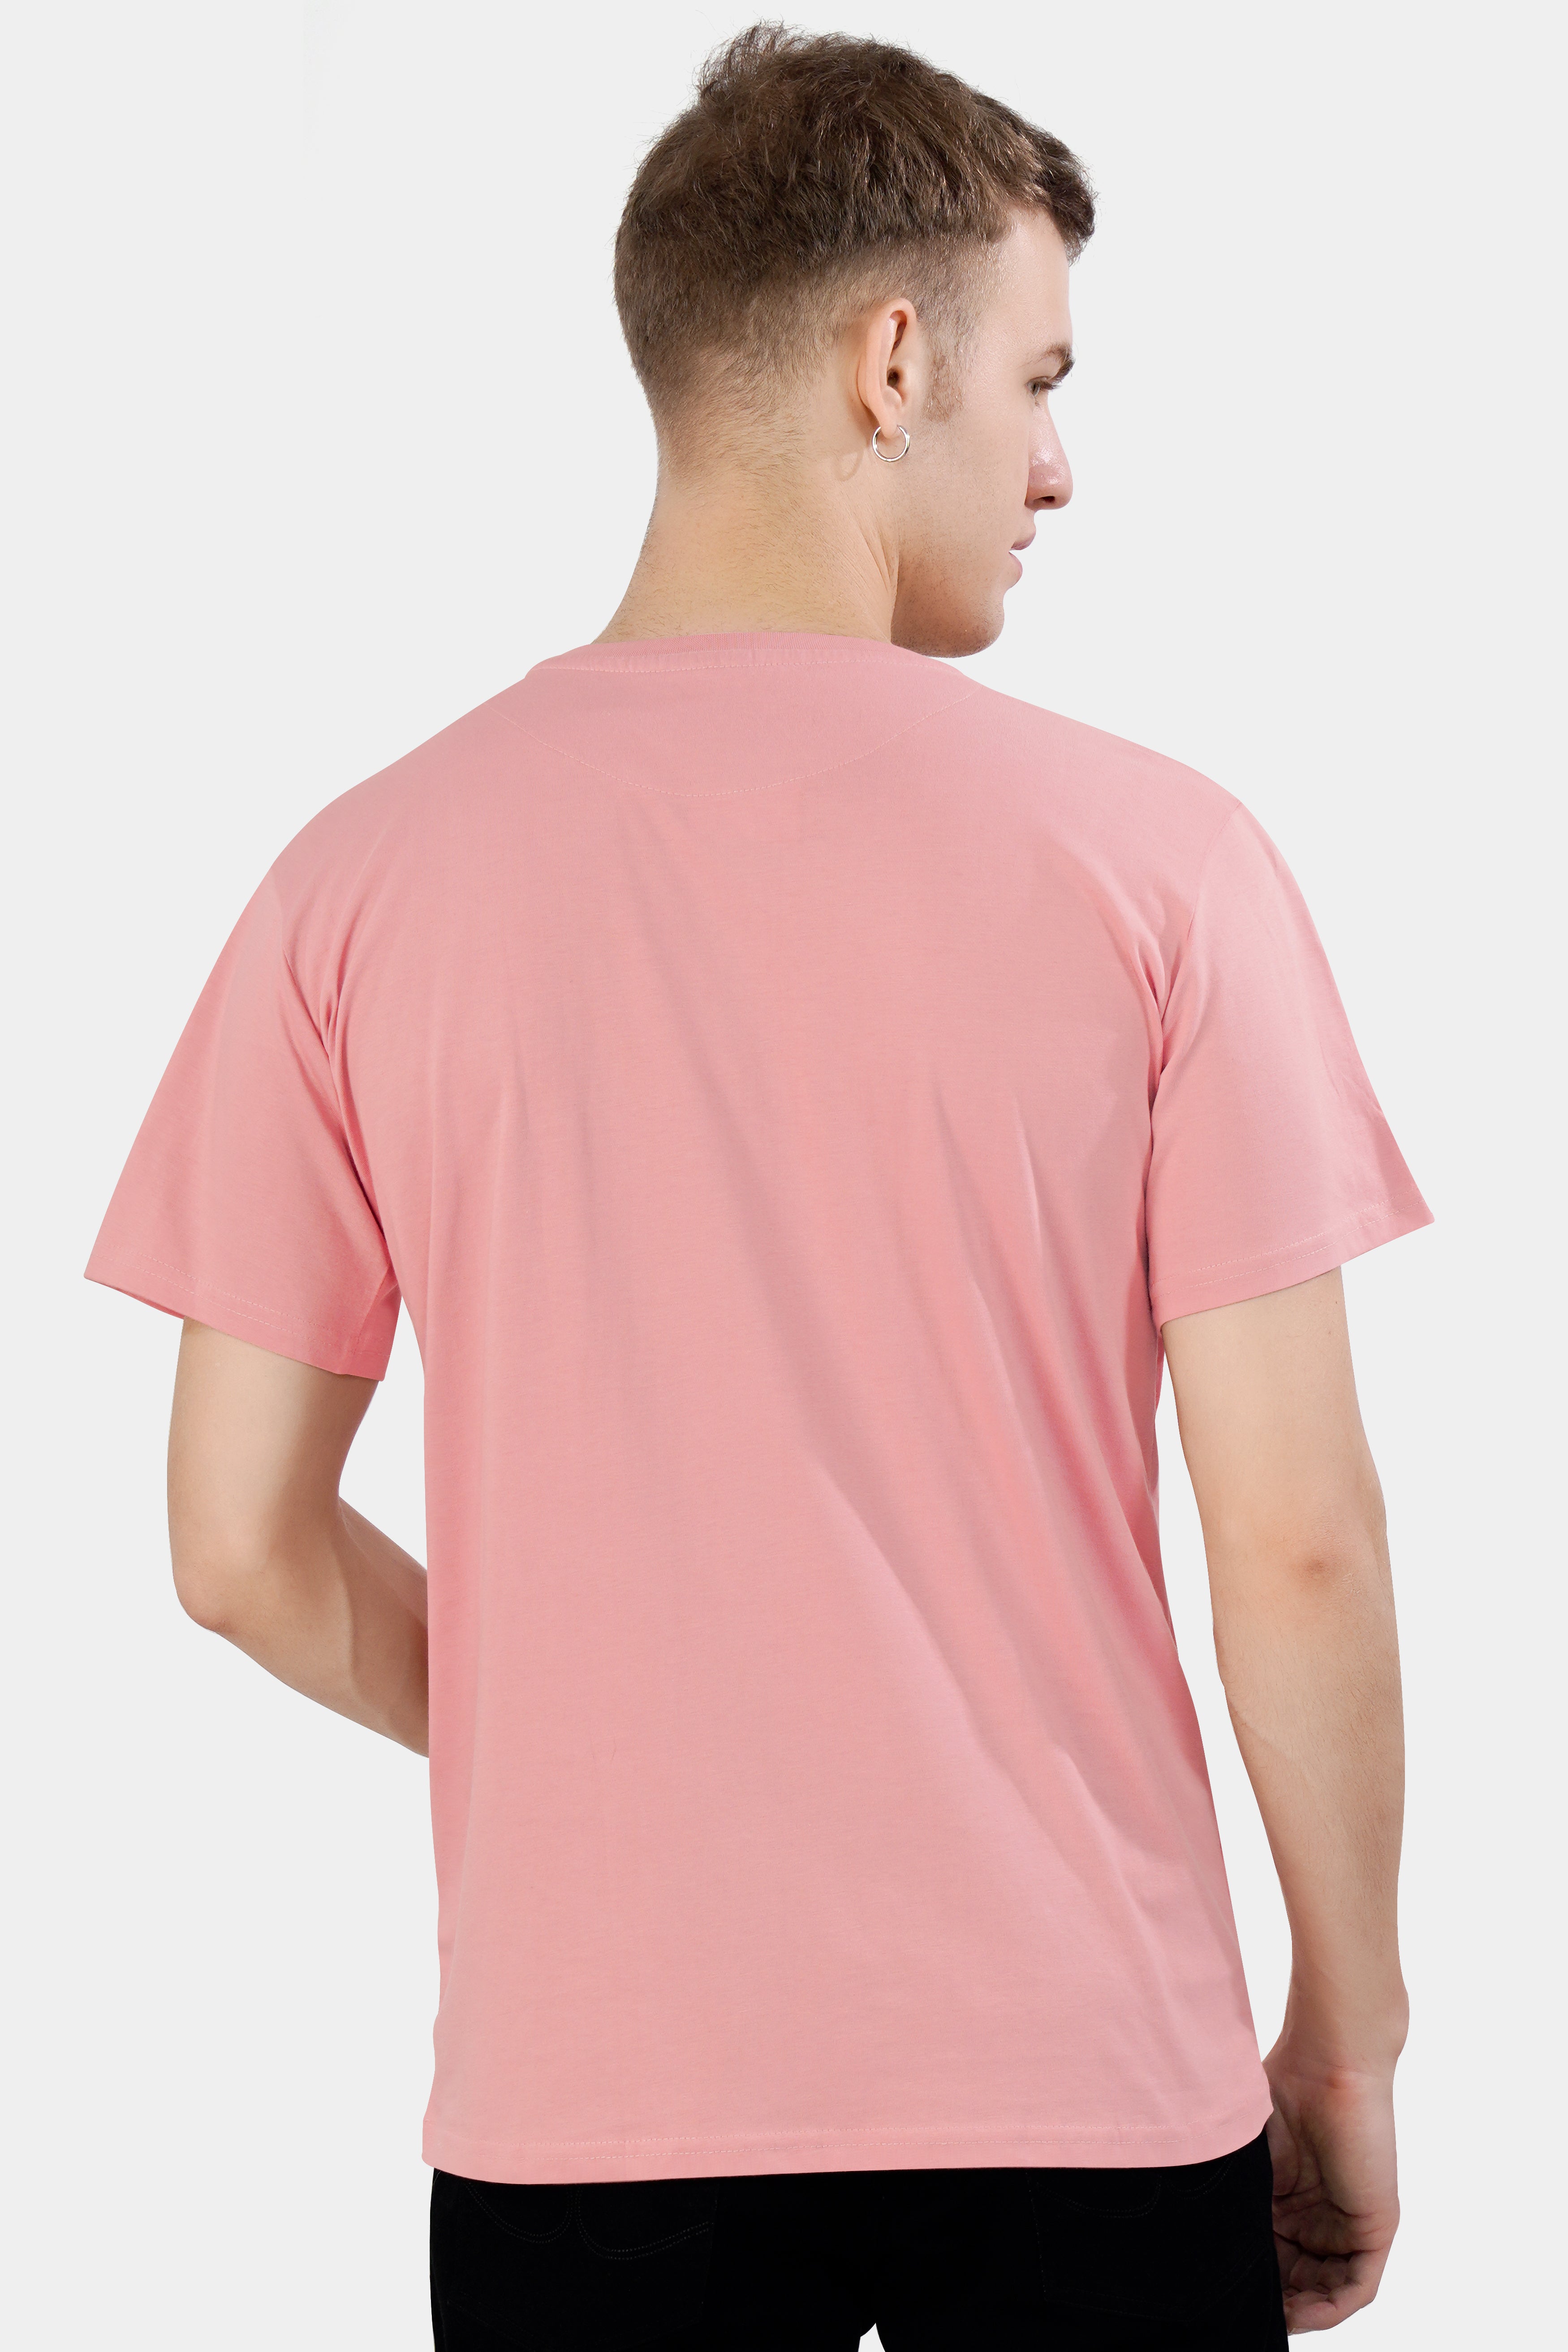 Beauty Bush Pink Funky Hand Painted Organic Cotton T-Shirt TS007-W04-ART-S, TS007-W04-ART-M, TS007-W04-ART-L, TS007-W04-ART-XL, TS007-W04-ART-XXL